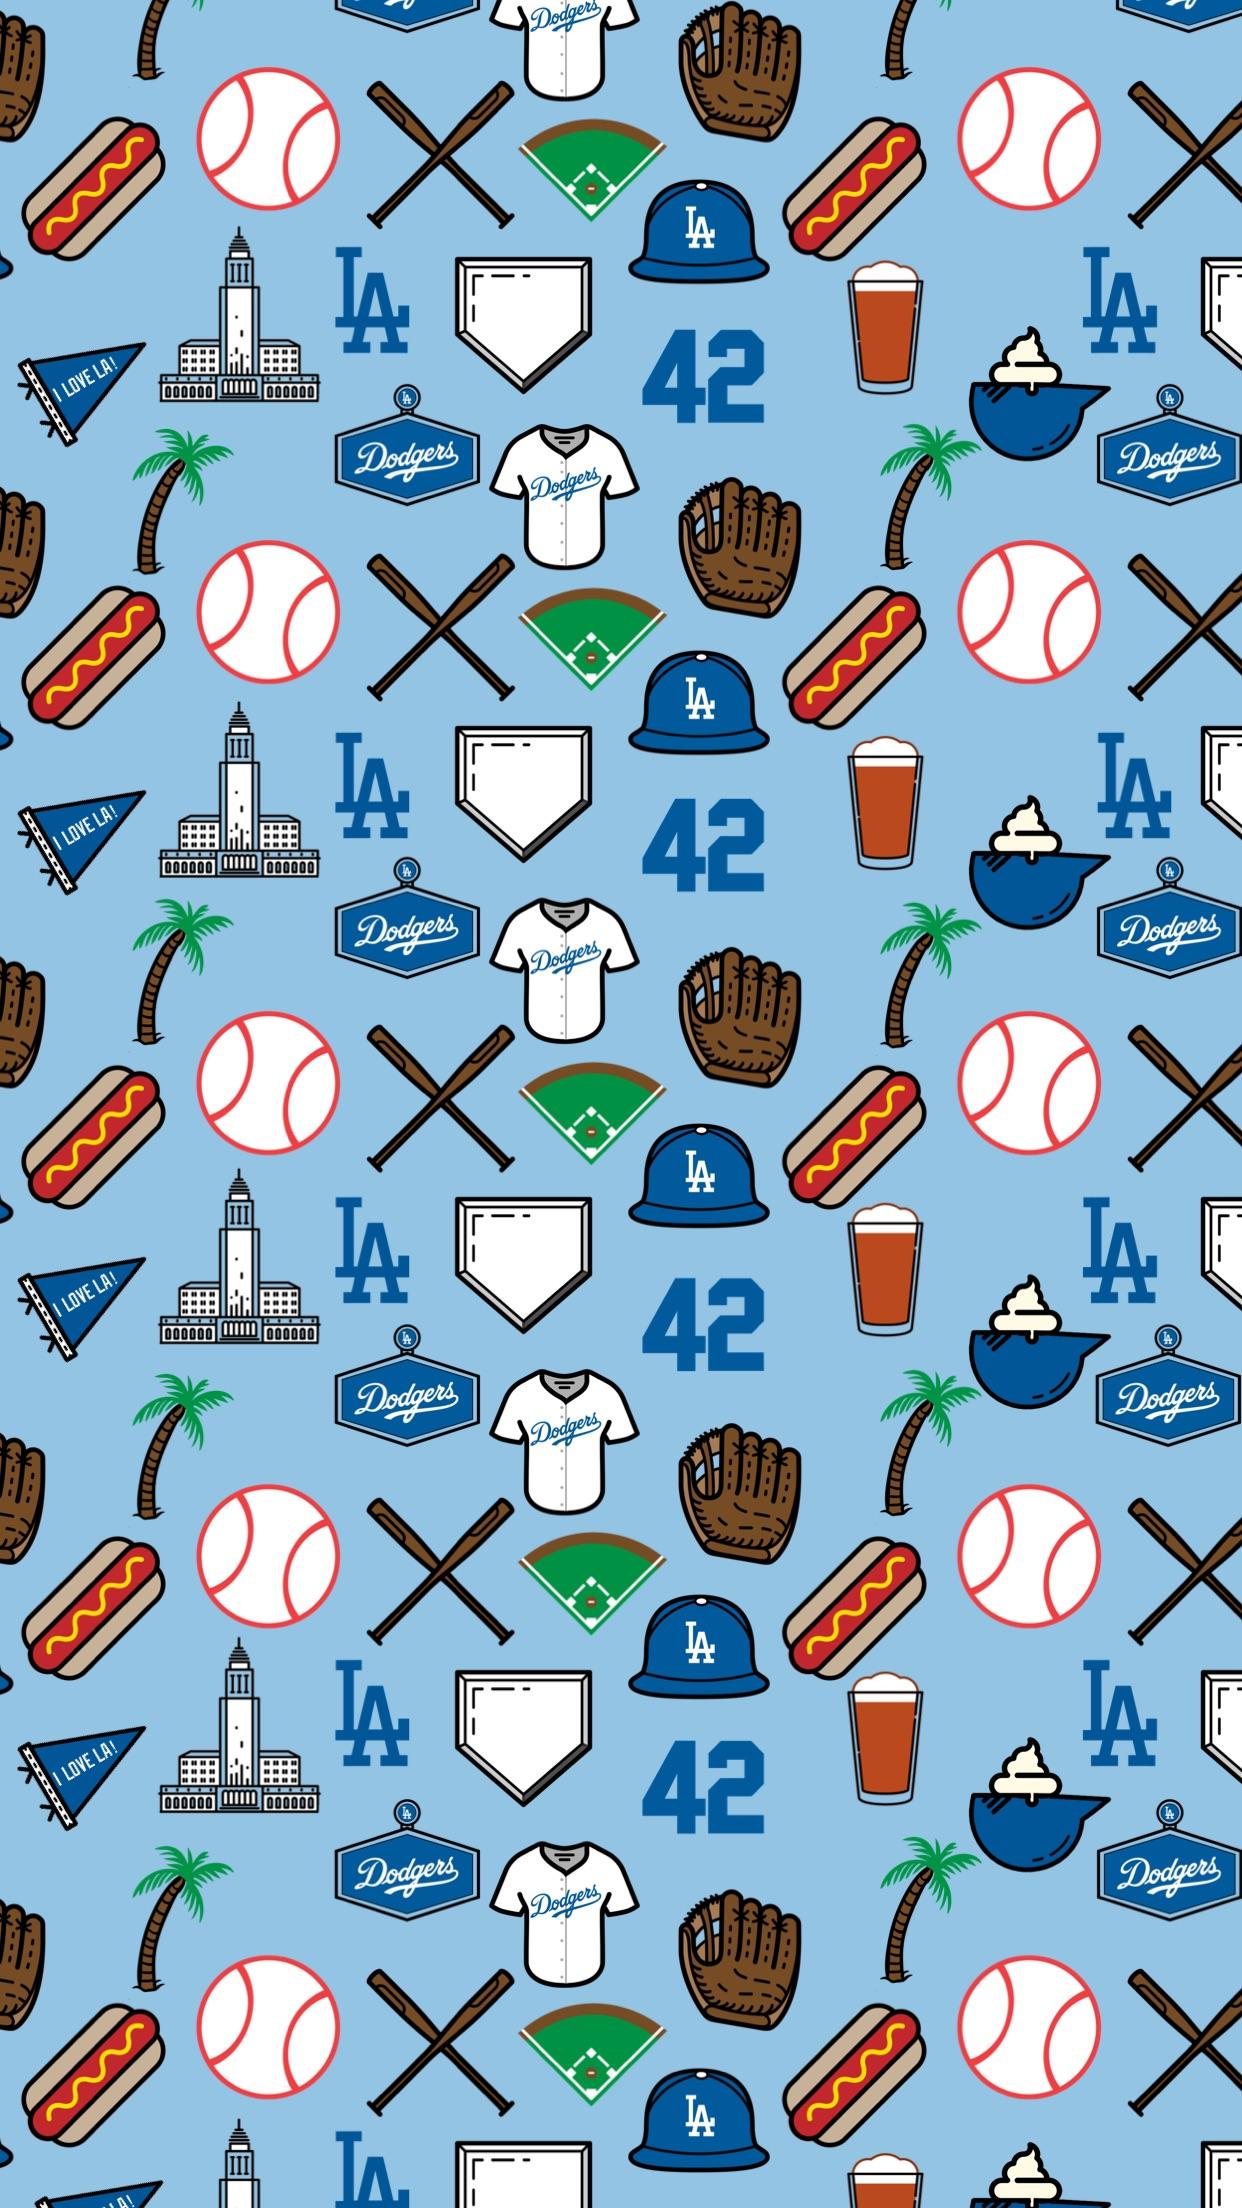 Dodger Stadium iPhone Wallpapers - Wallpaper Cave